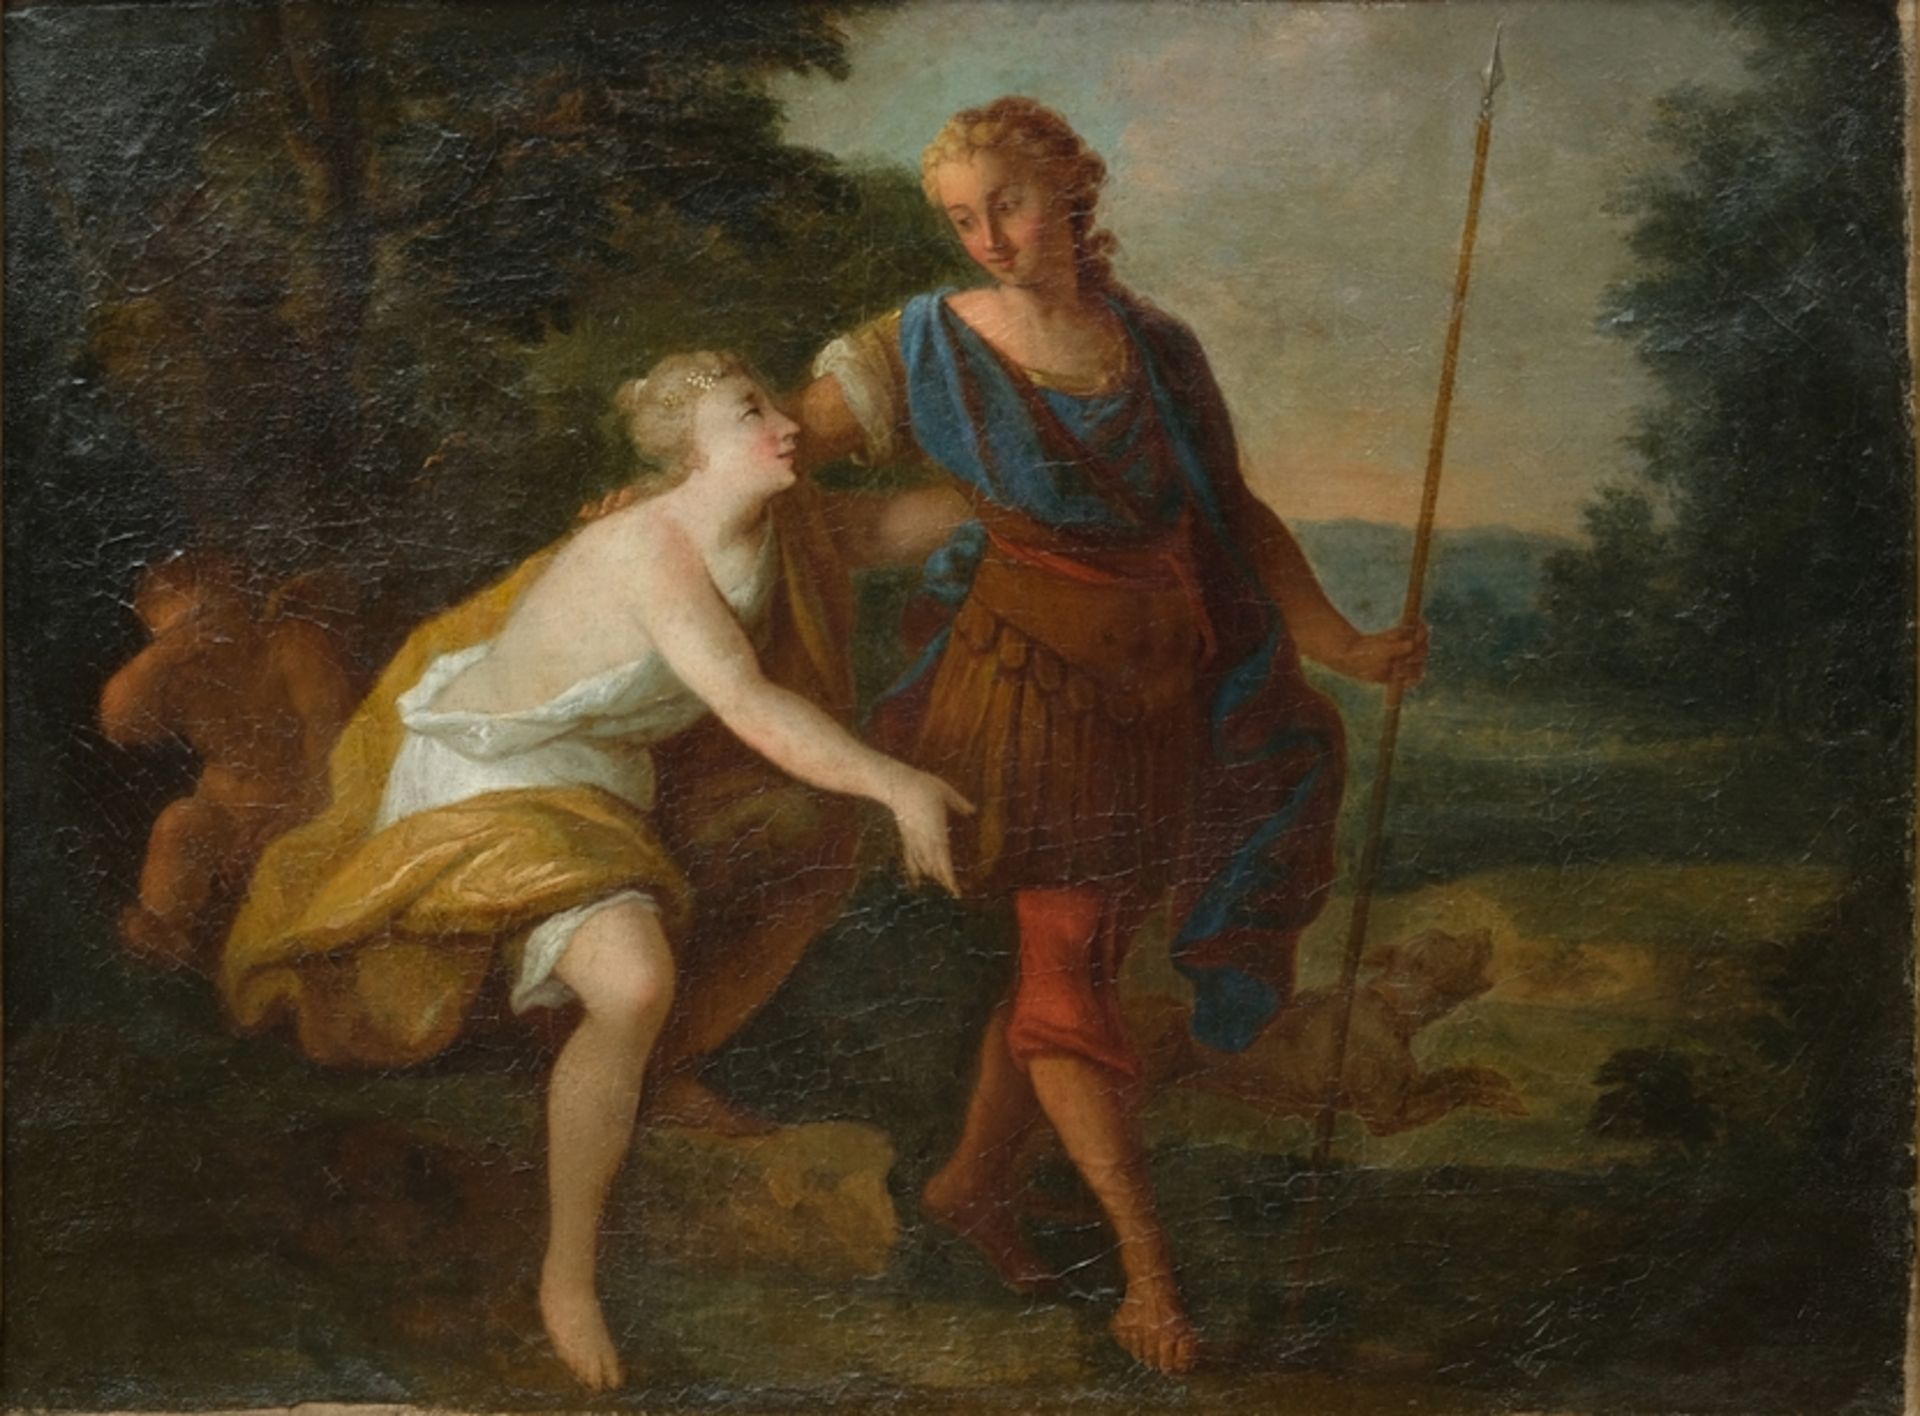 Unknown, (around 1700) Venus and Adonis, oil on canvas. 